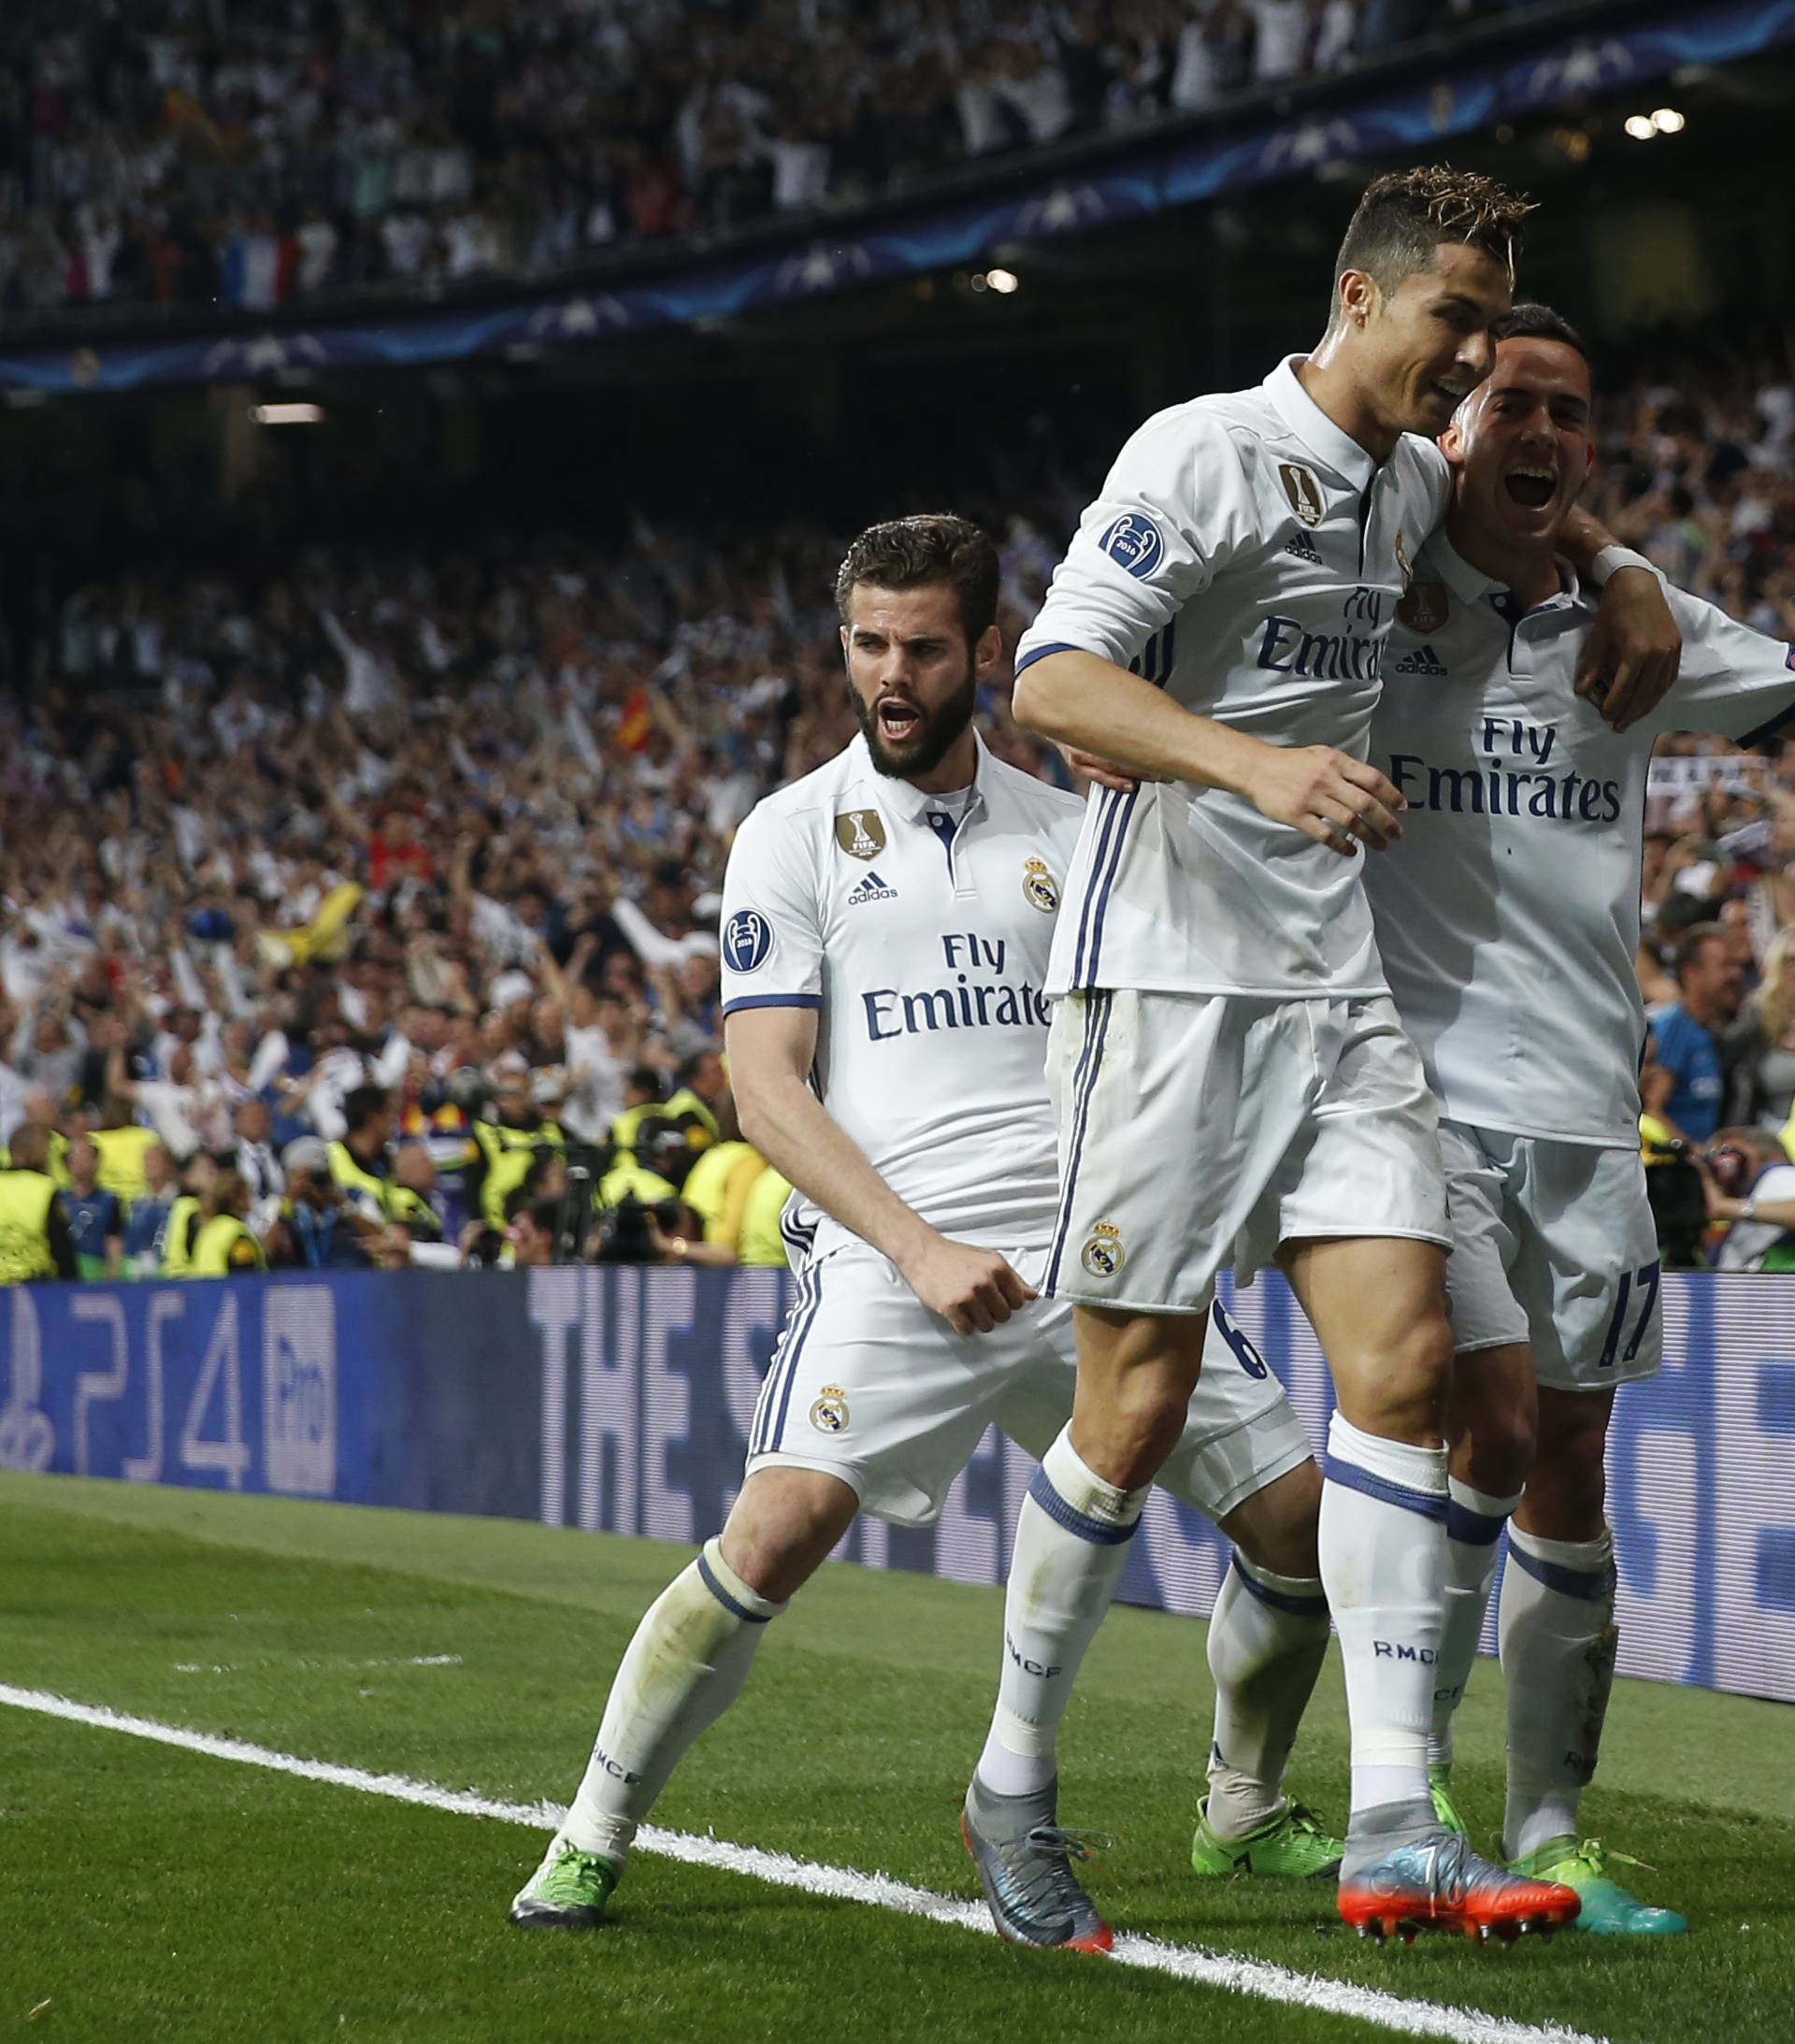 Real Madrid's Cristiano Ronaldo celebrates scoring their third goal with team mates